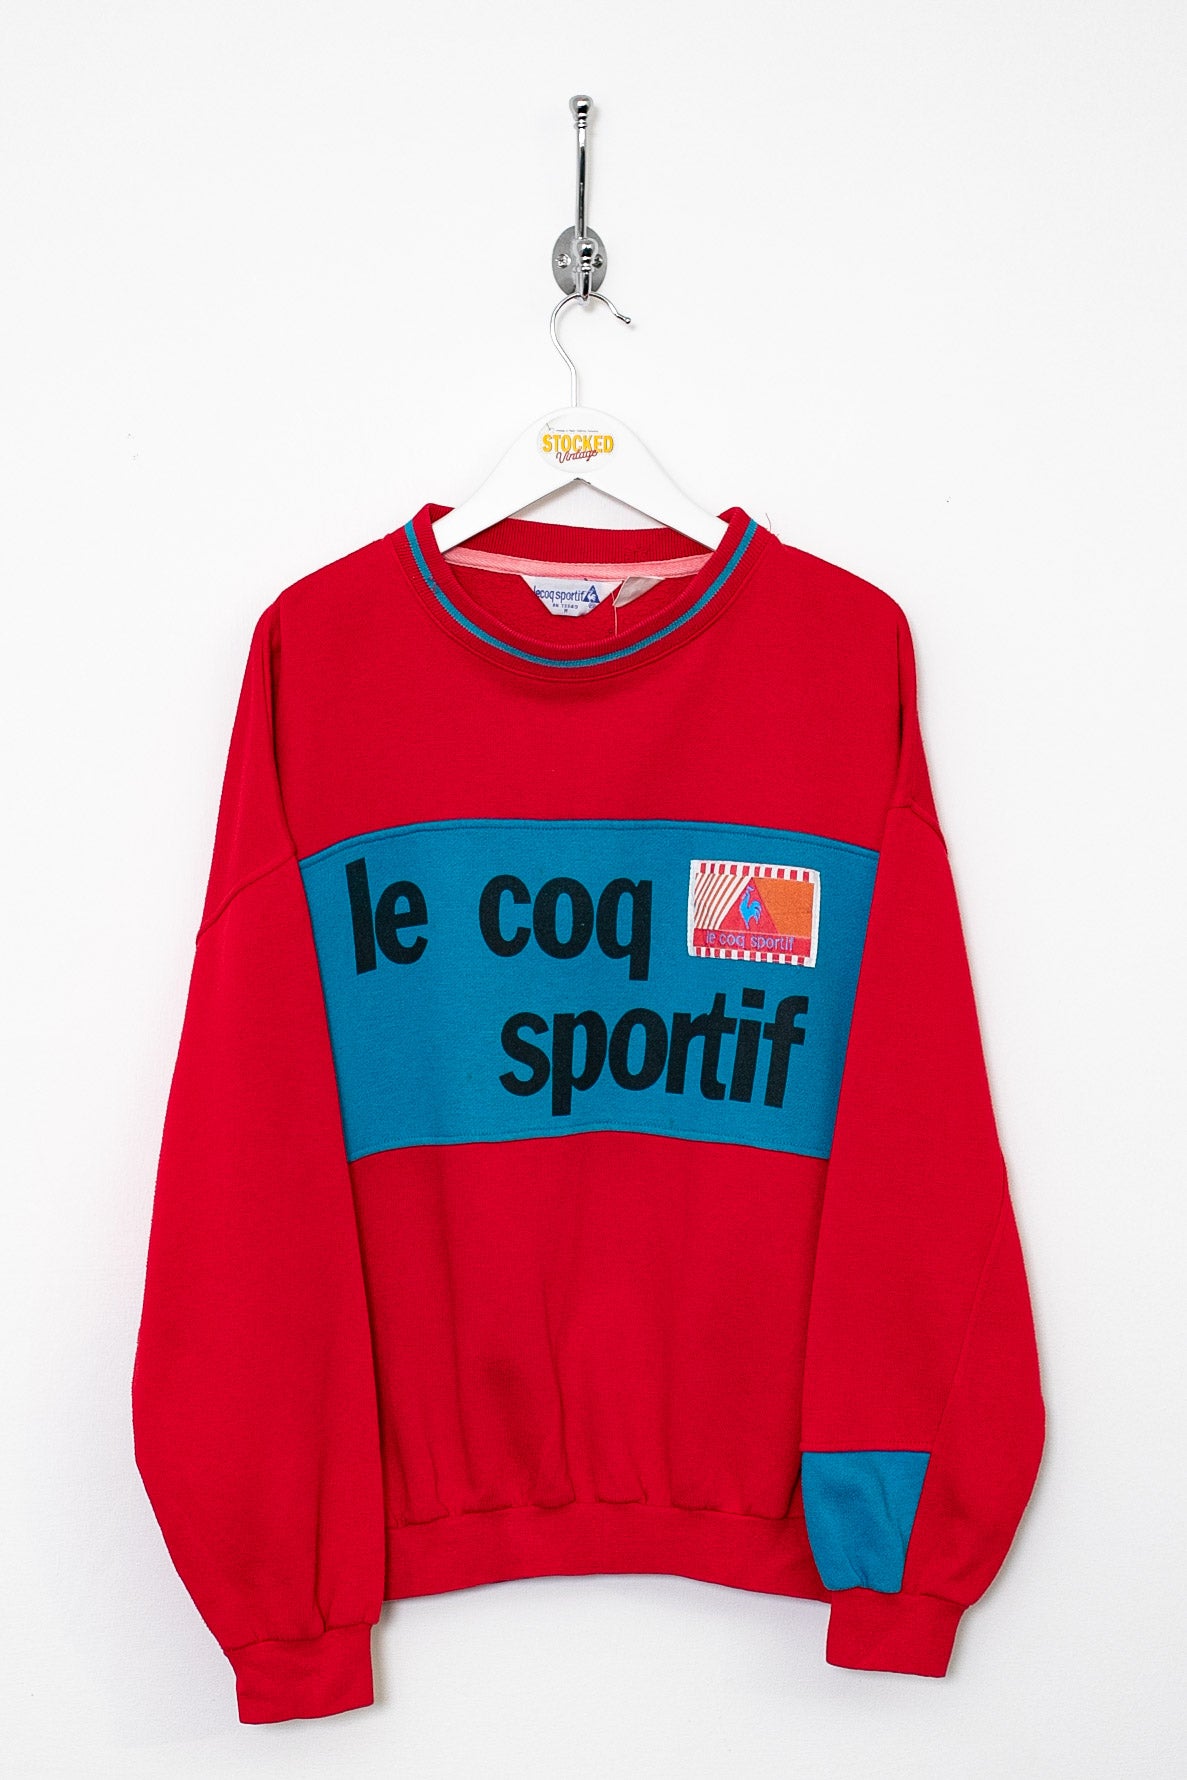 90s Le Coq Sportif Sweatshirt (M)